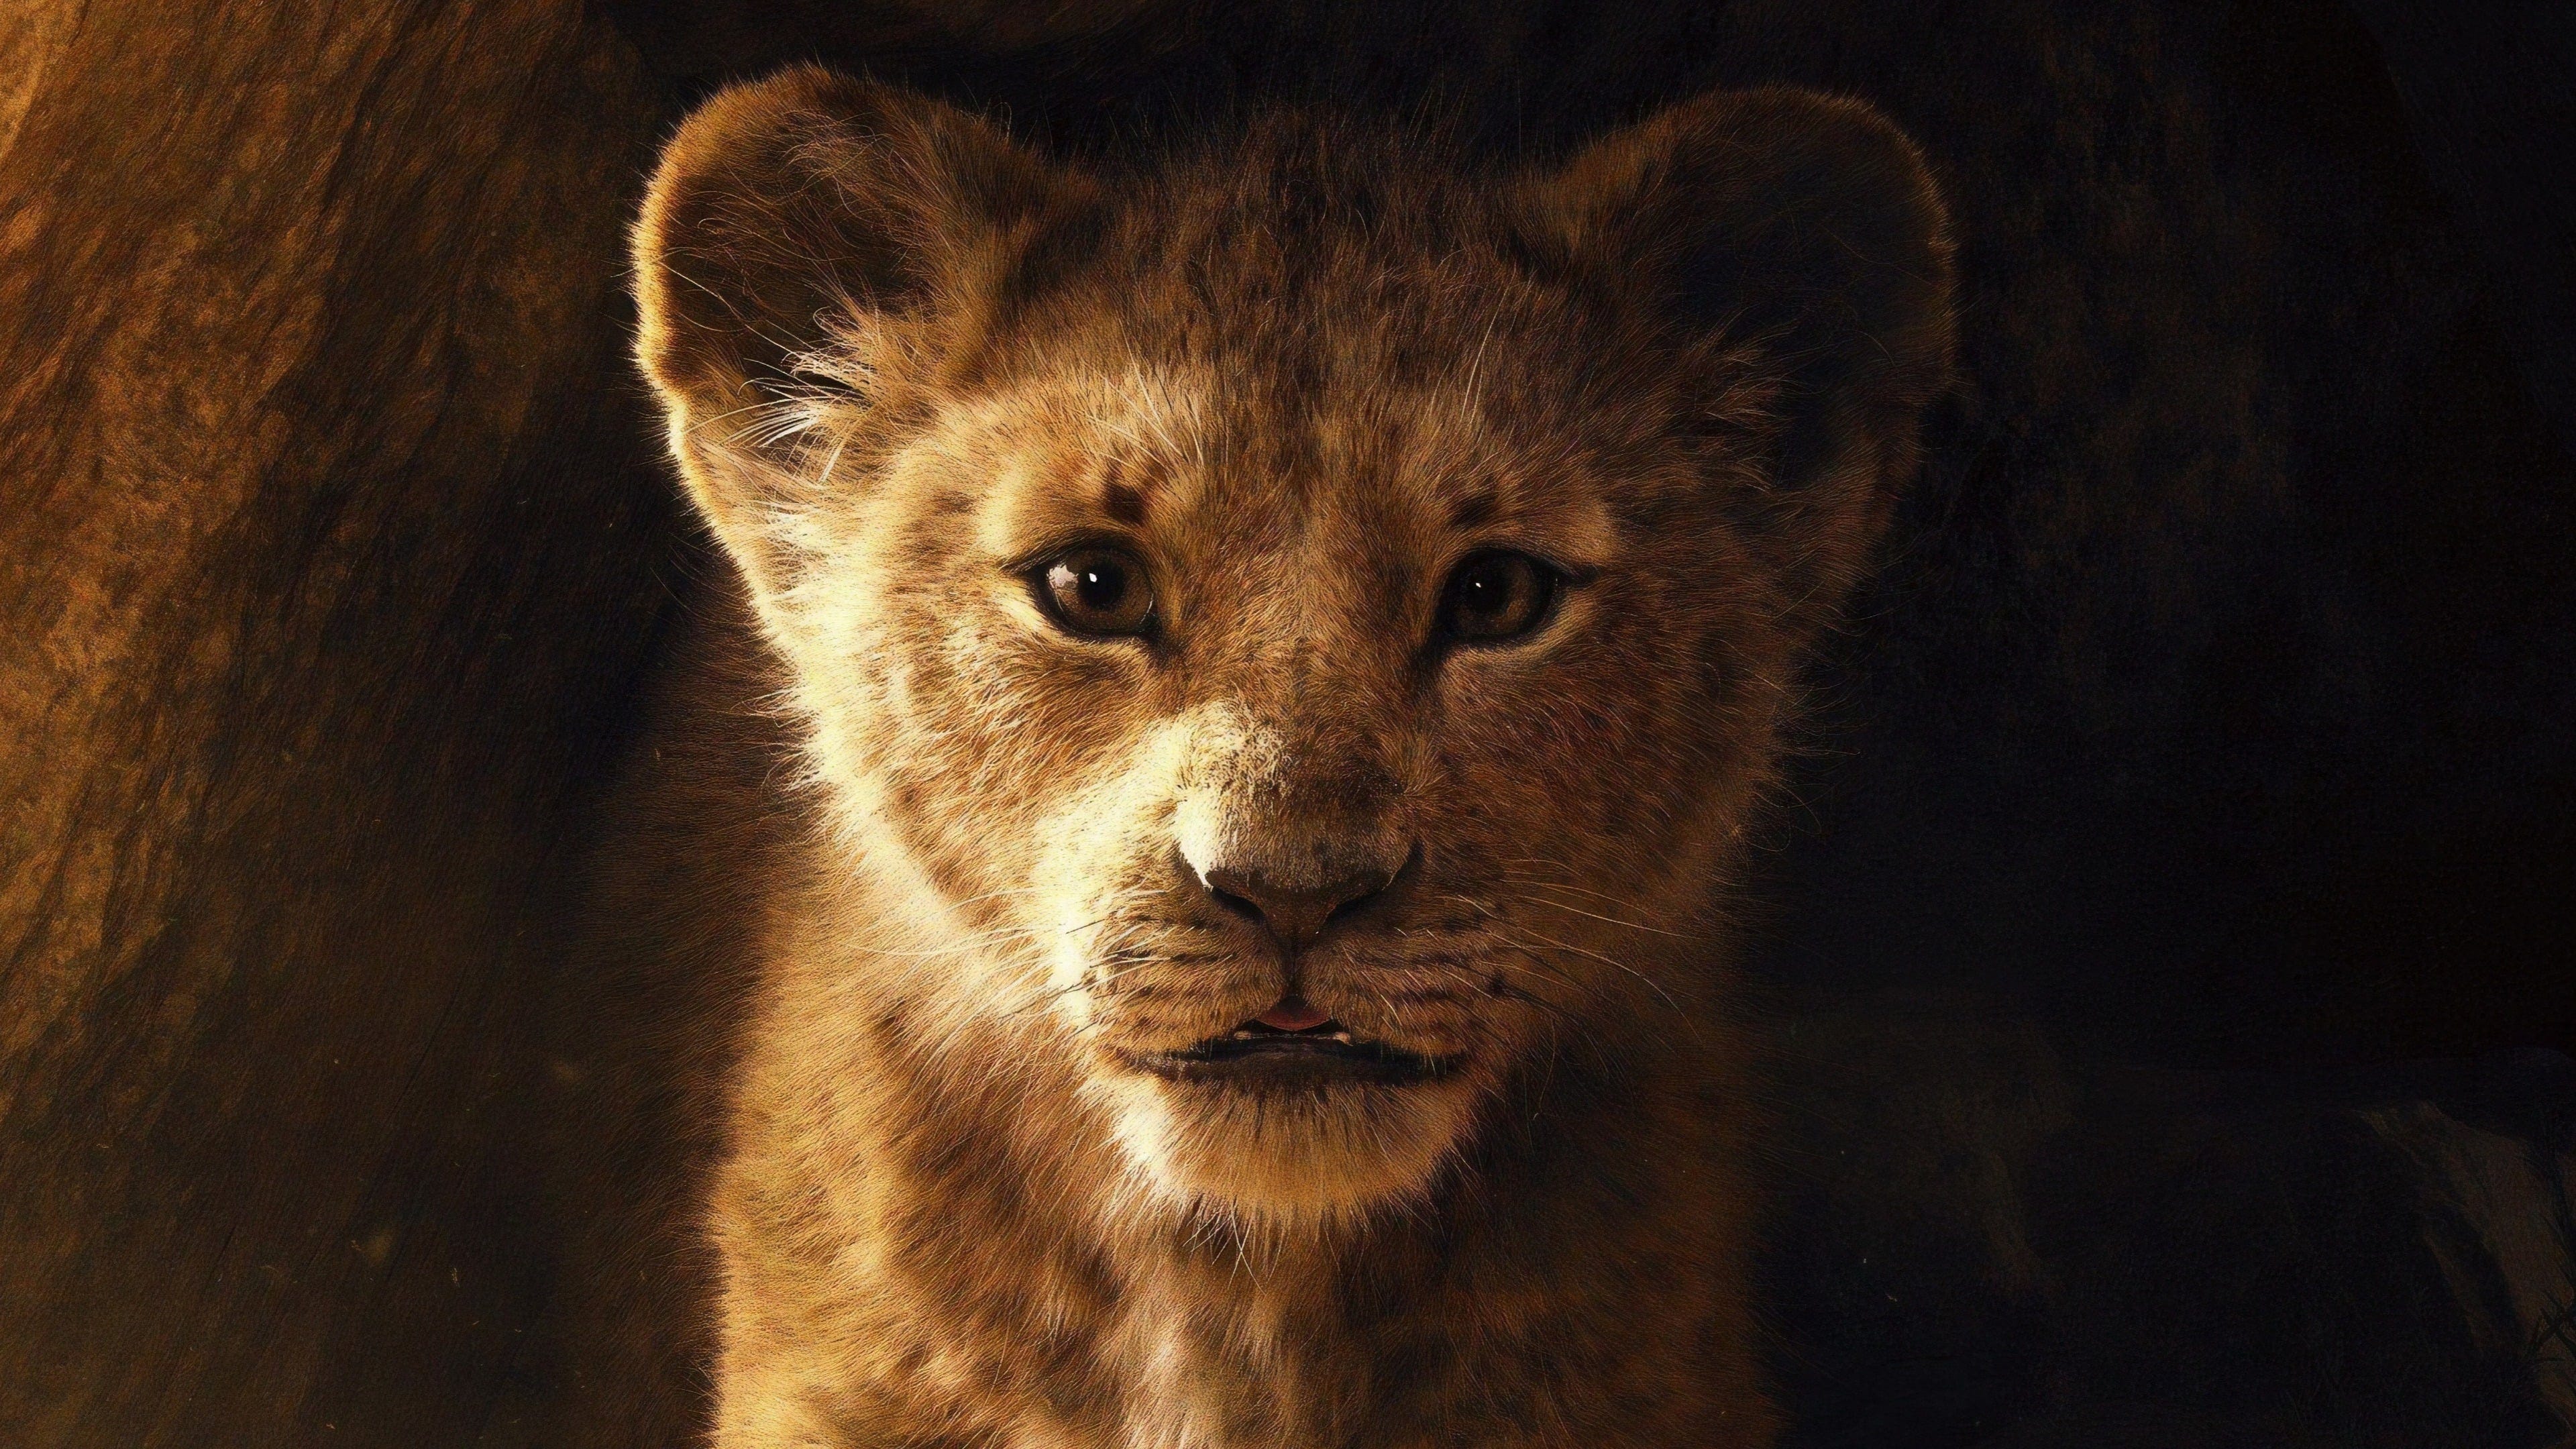 The Lion King 2019 Streaming Hd Google Drive 18 323 Movies By Atuh Sok Medium